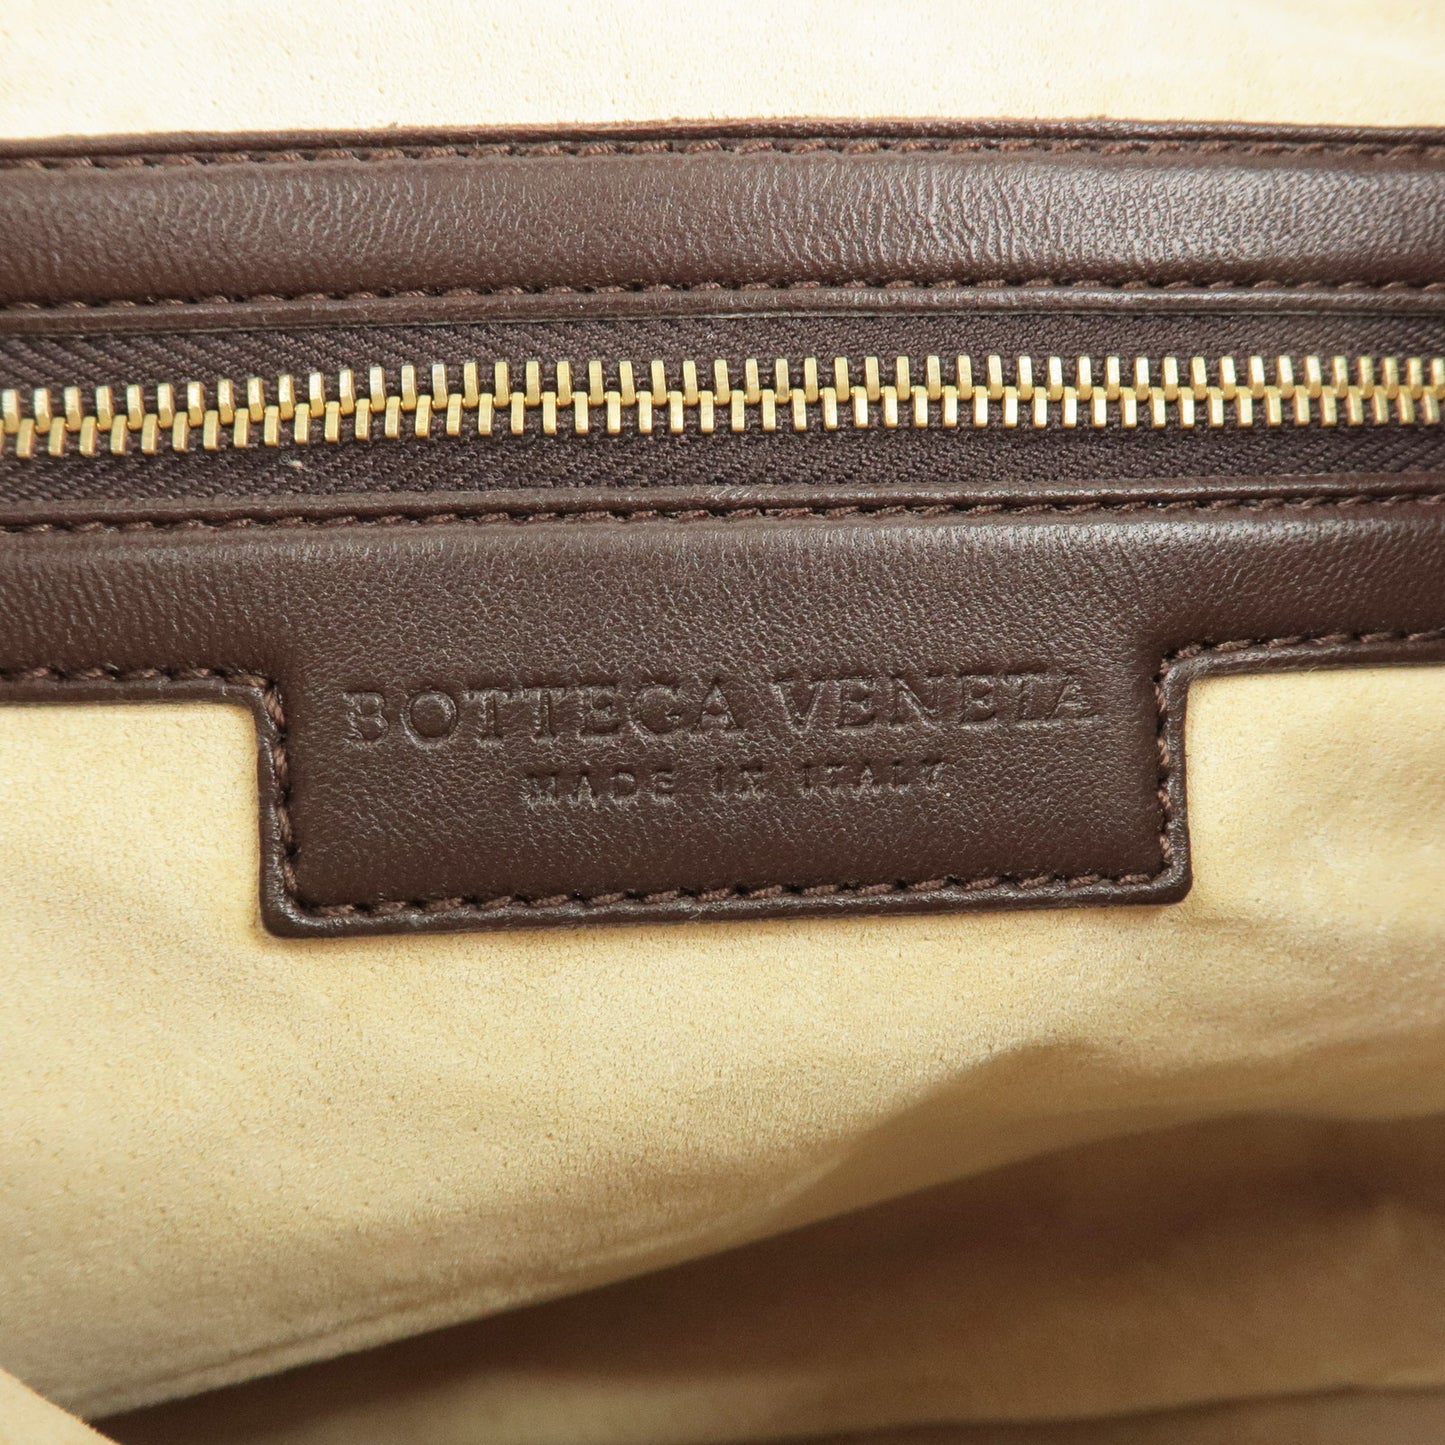 BOTTEGA VENETA Intrecciato Leather Shoulder Bag Brown 115653